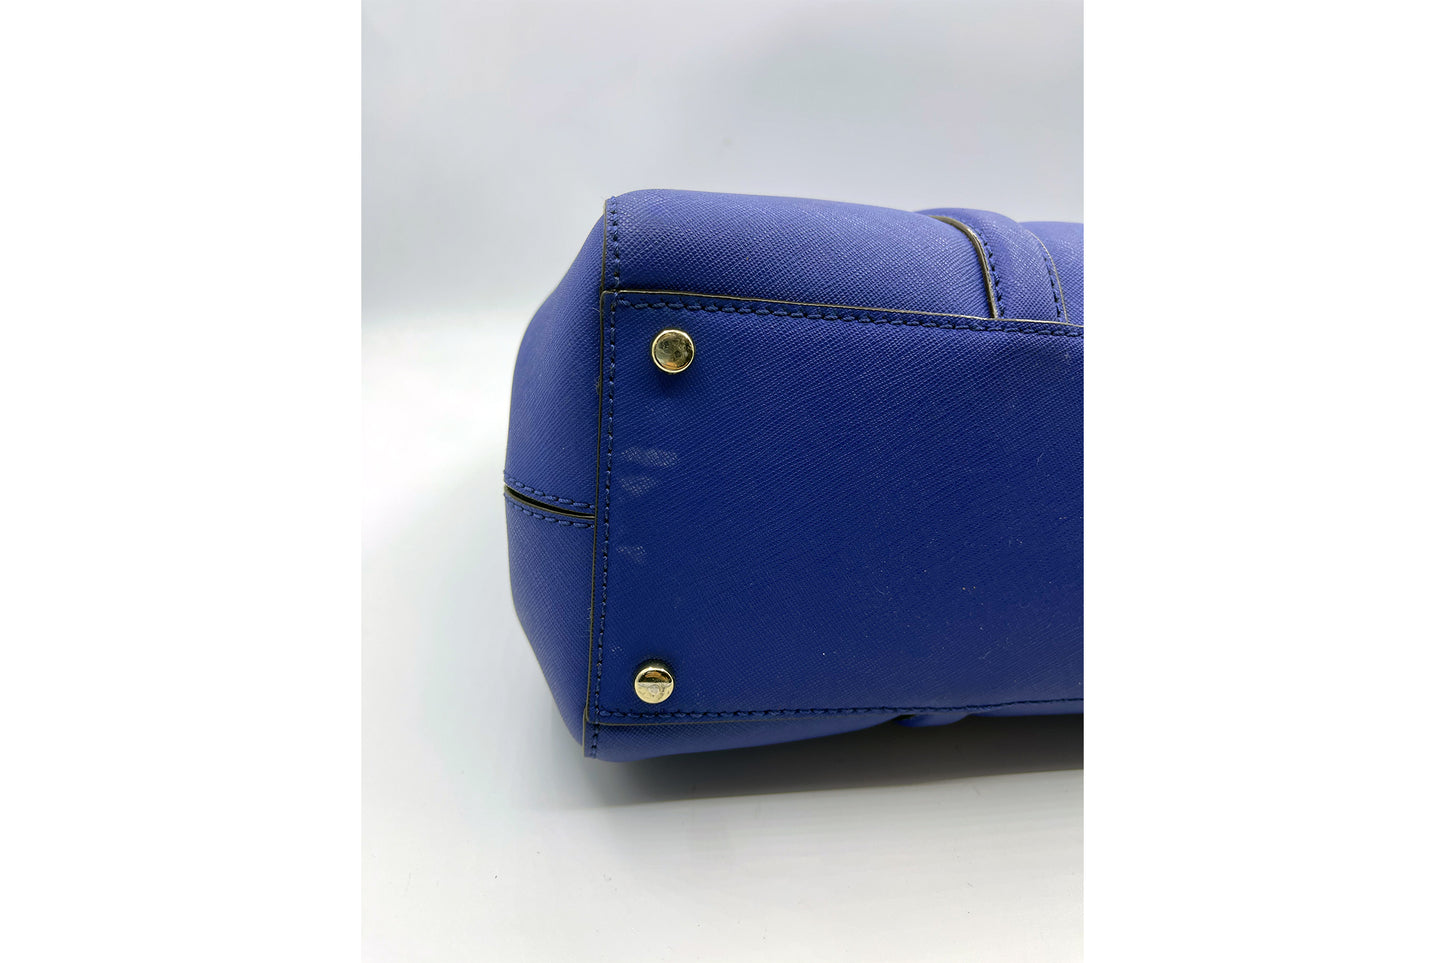 Kate Spade Blue Color PVC 2 Way Use Bag